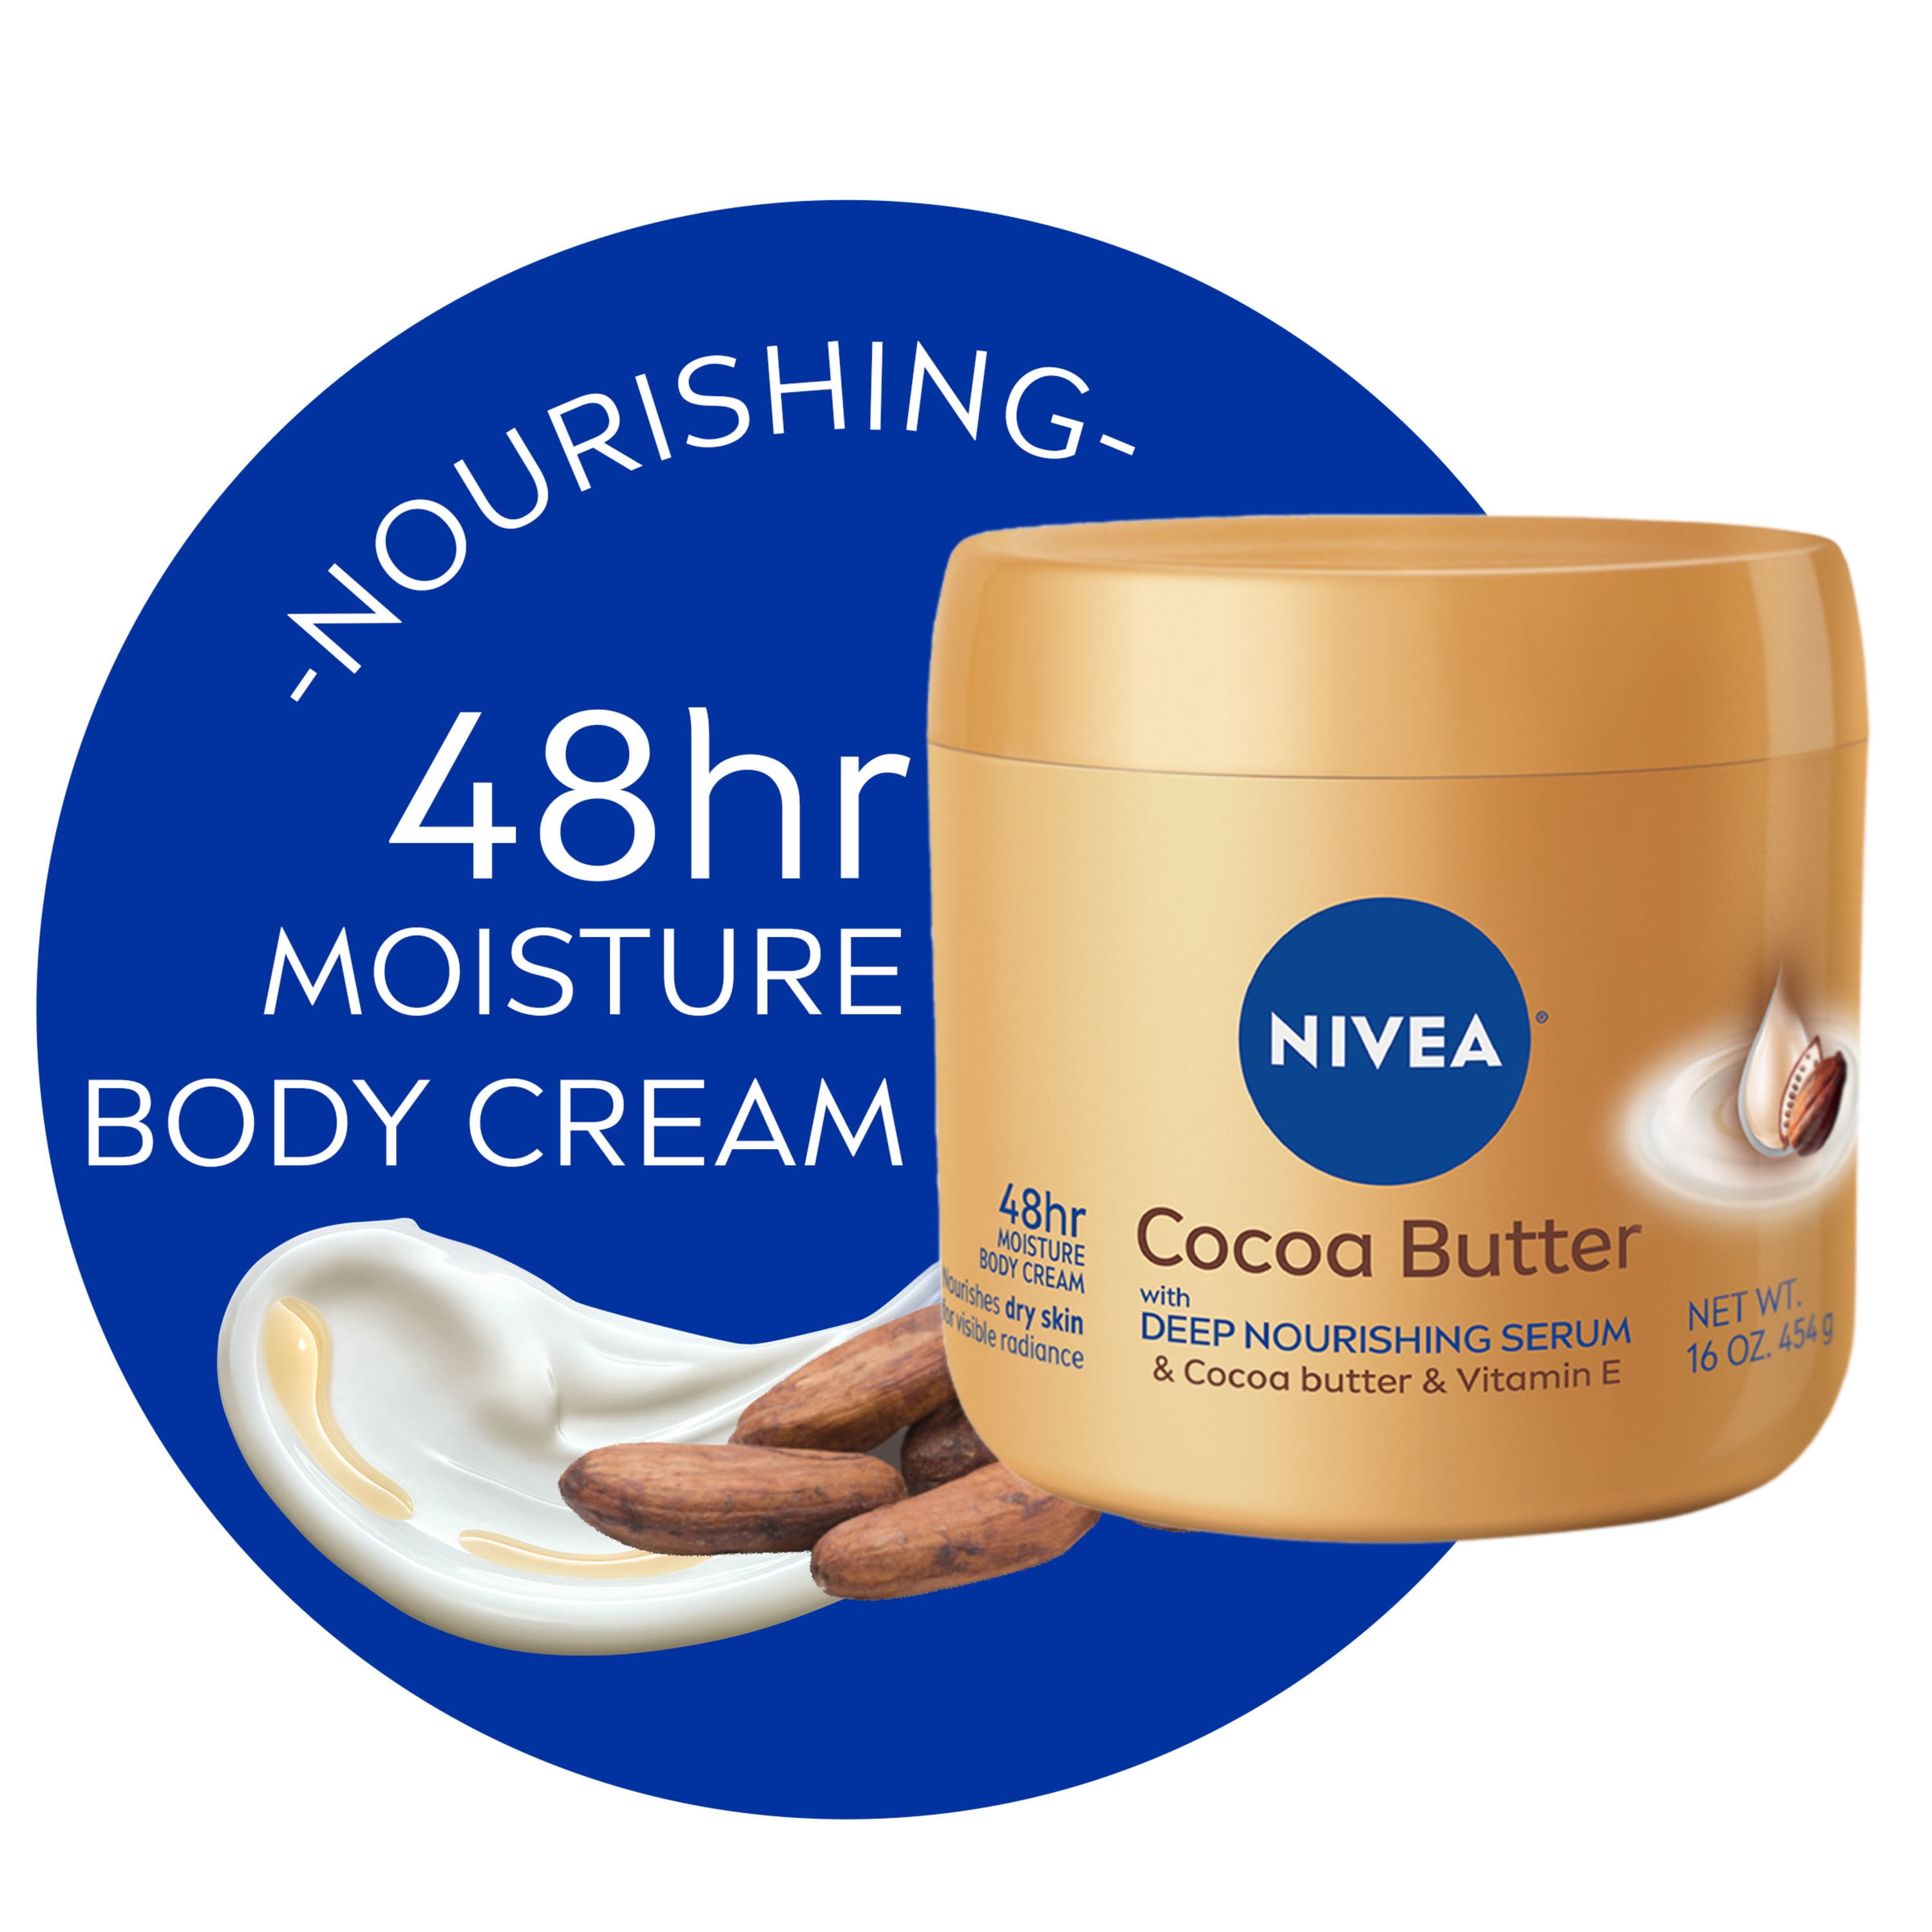 NIVEA Cocoa Butter Body Cream with Deep Nourishing Serum, 16 Ounce